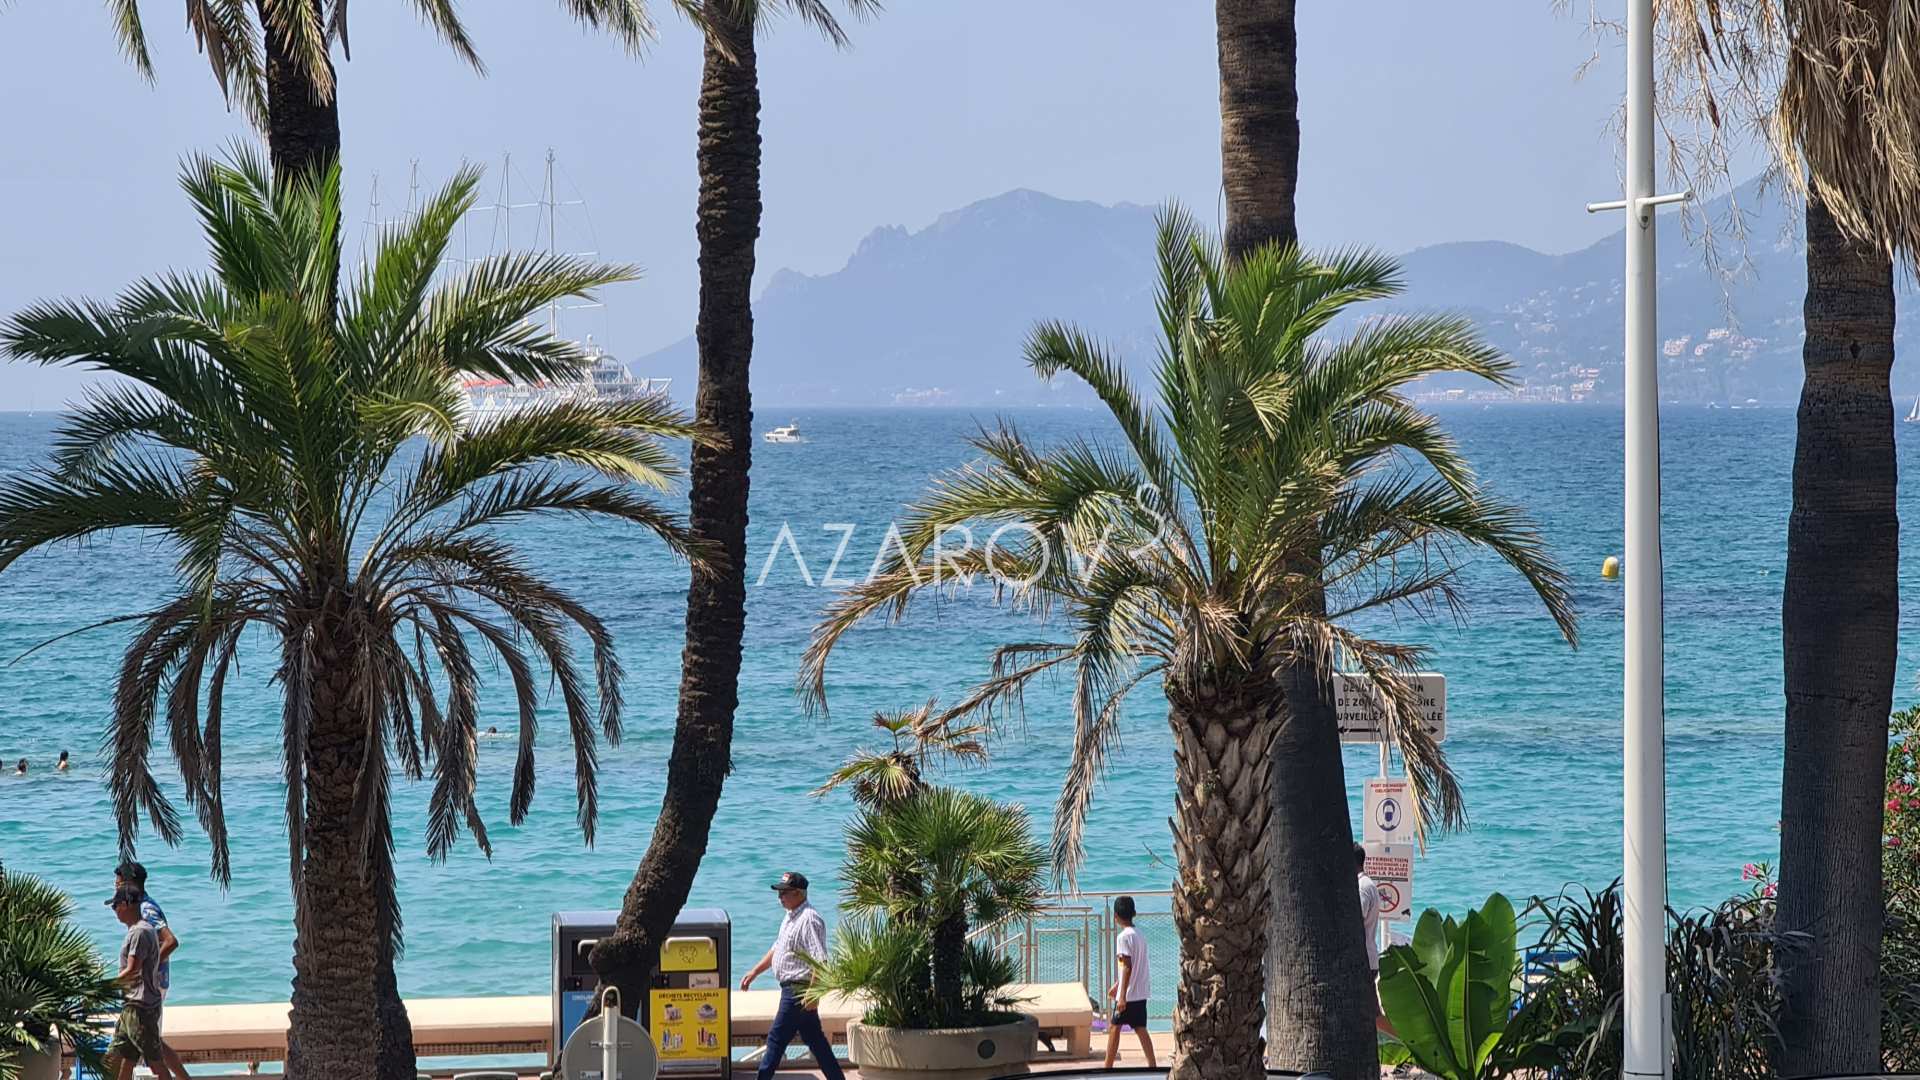 Croisette Beach Cannes appartement 320 m2 aan zee